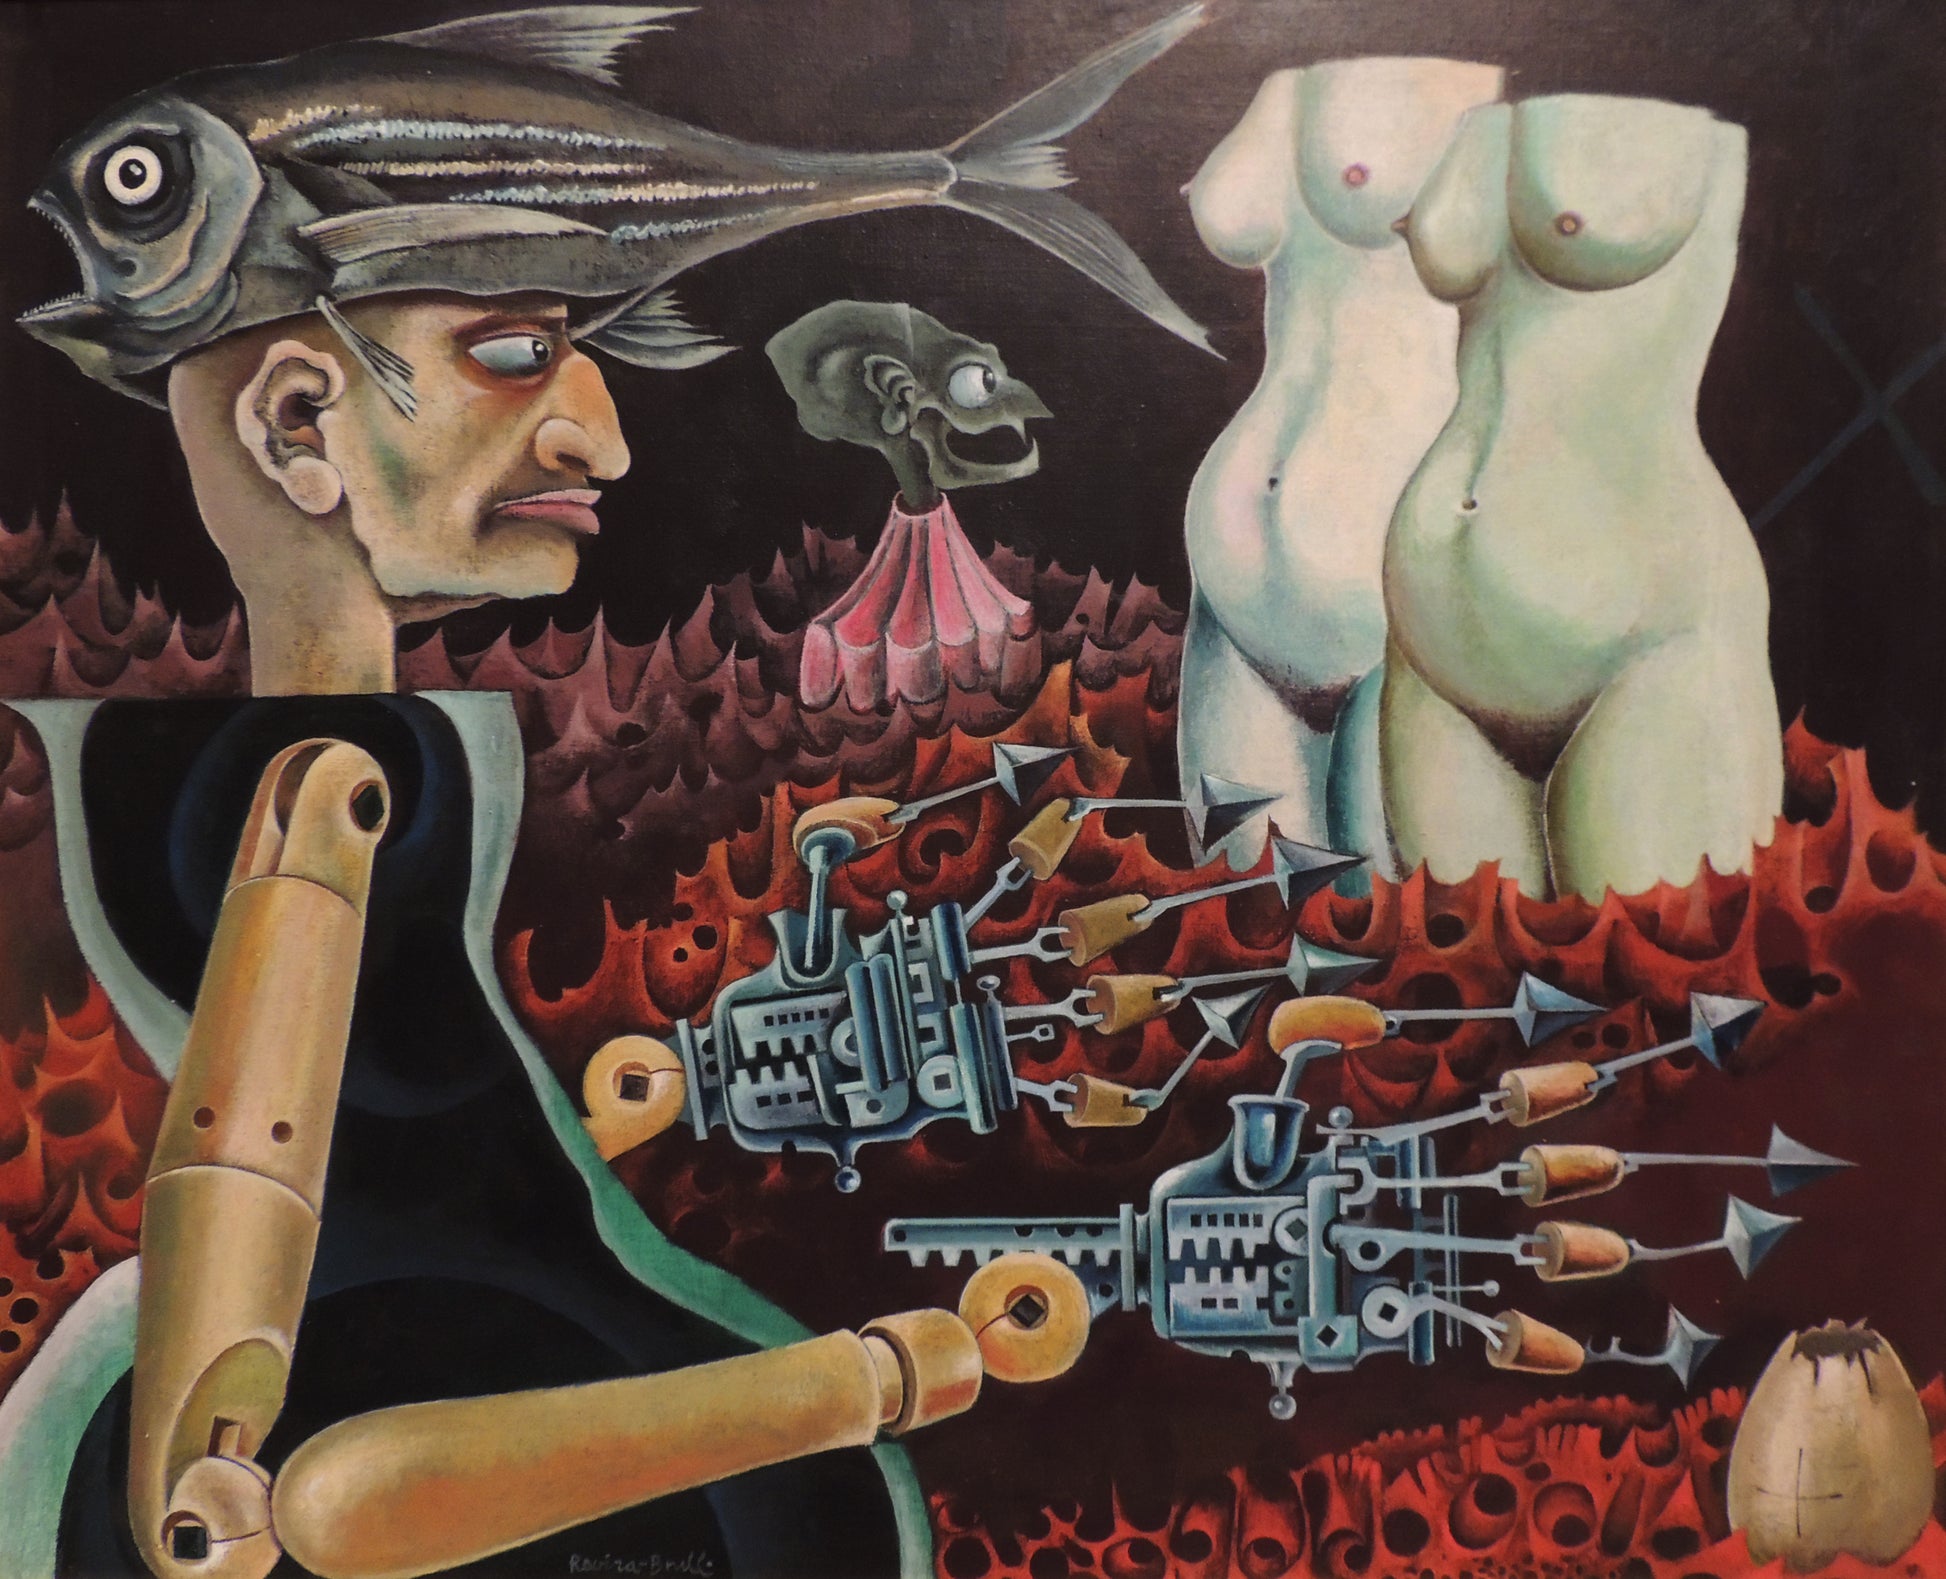 Josep Maria Rovira Brull cuadro surrealista Les mans mecániques Gaudifond